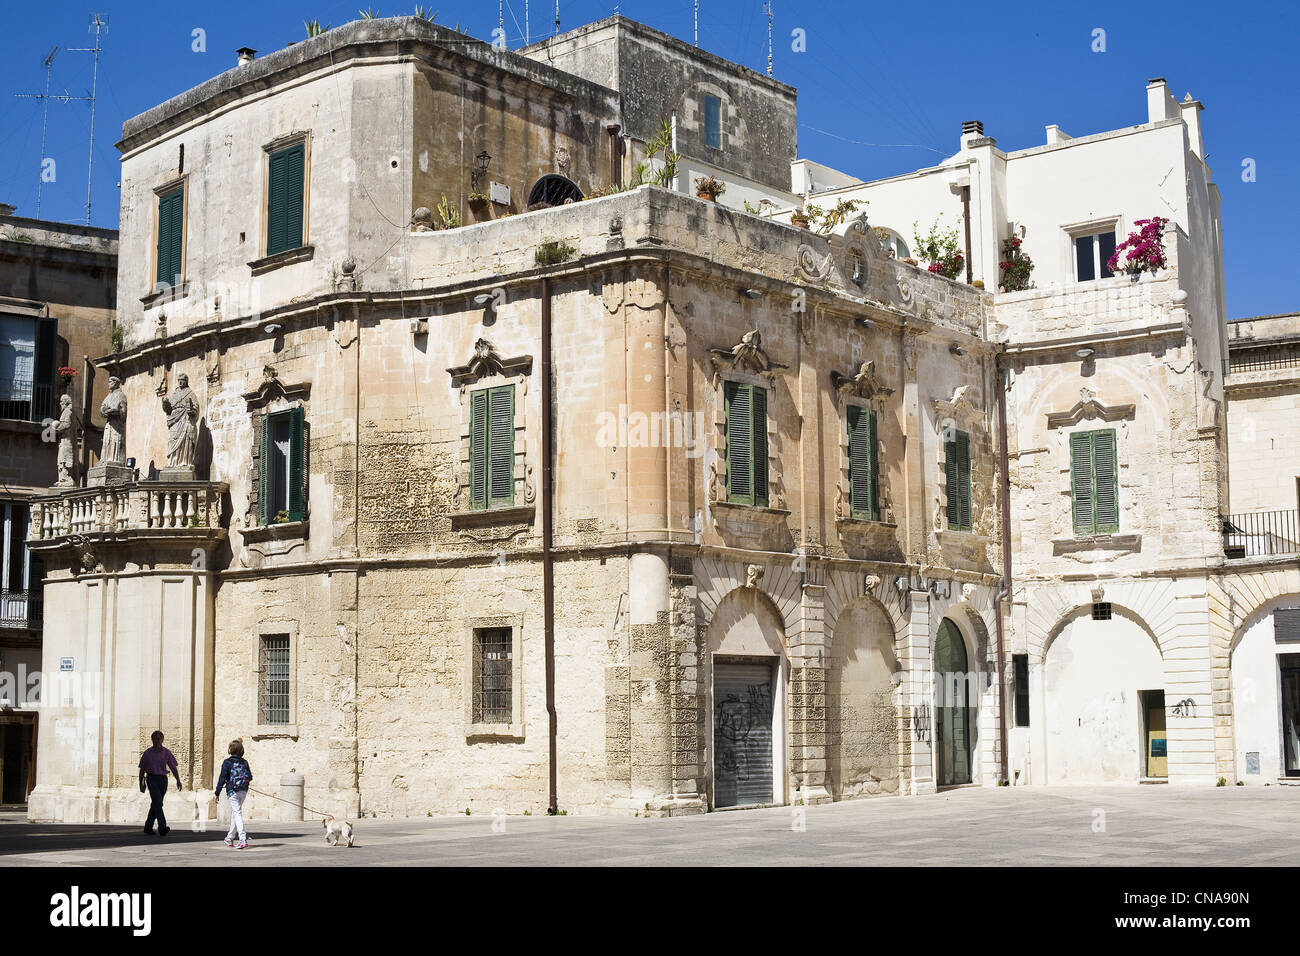 Italy, Puglia, Lecce, Duomo square, 17th century building at the entrance of cathedral square Stock Photo